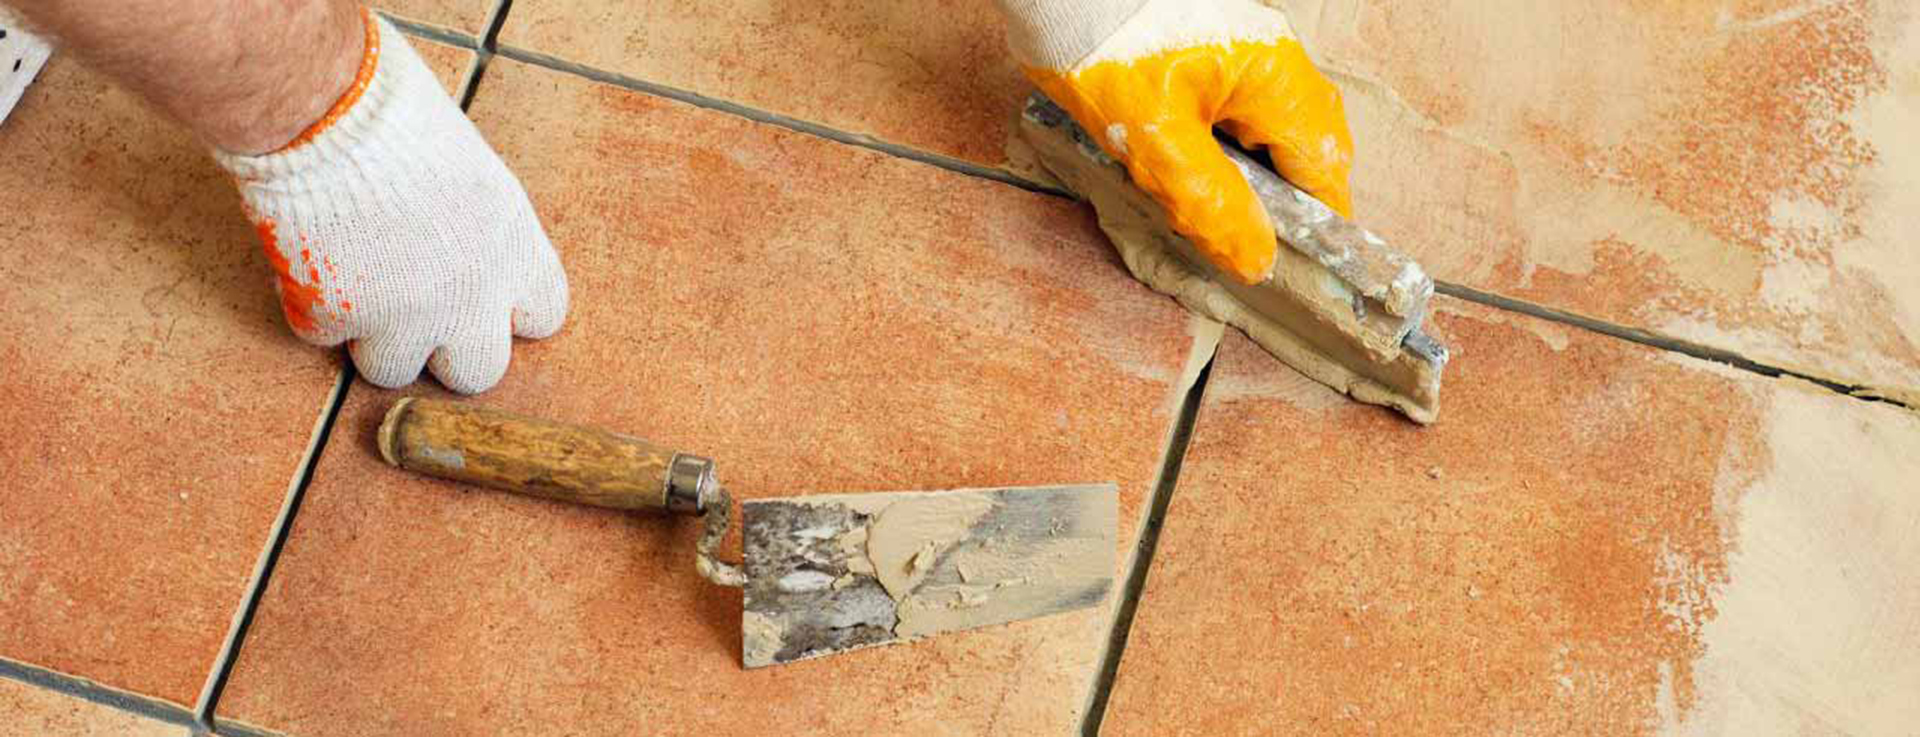 Tile Repairs - Impress Tiling and Waterproofing